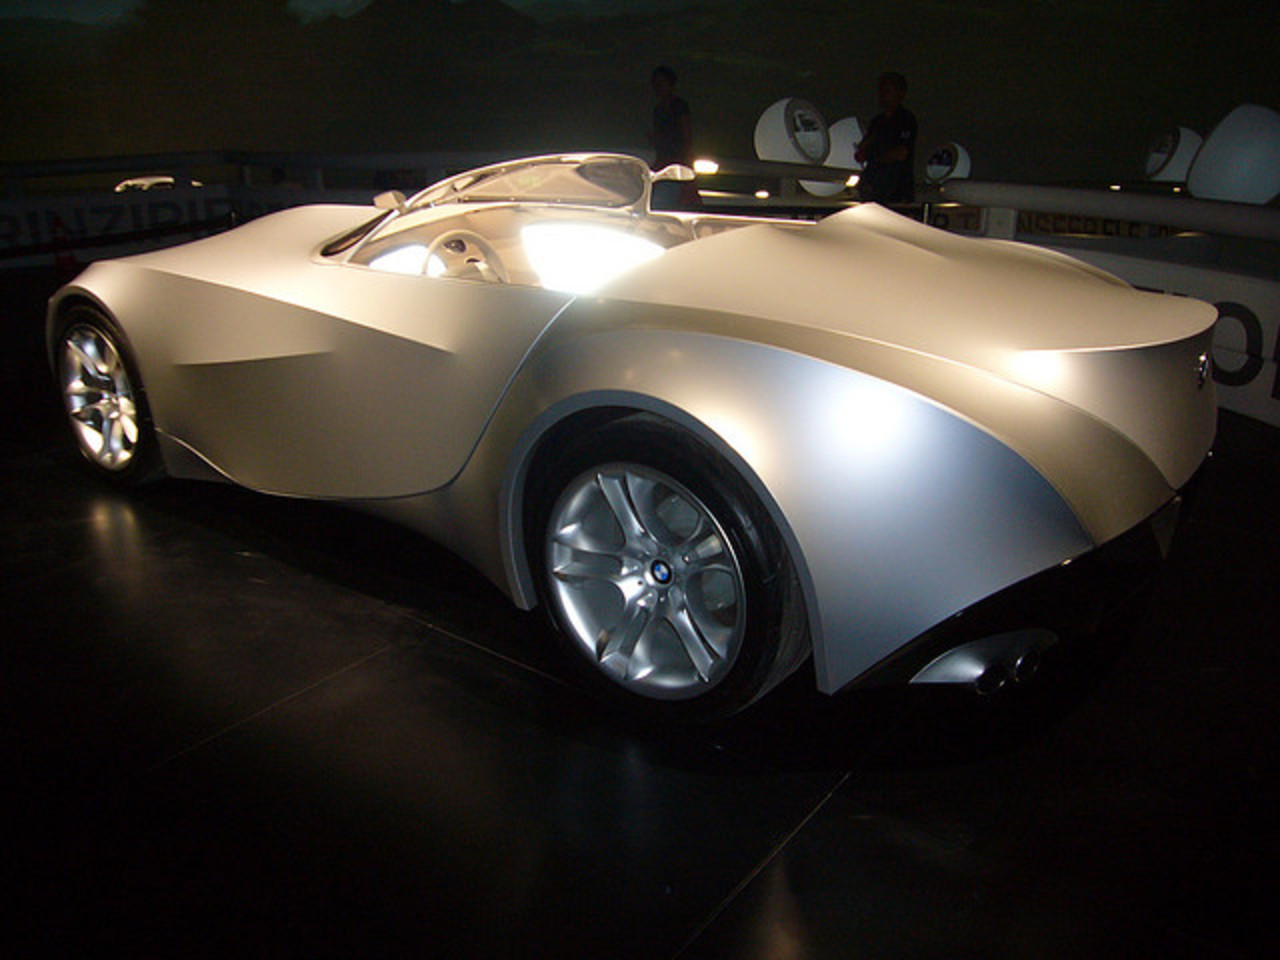 BMW Conceptcar Gina Light | Flickr - Photo Sharing!